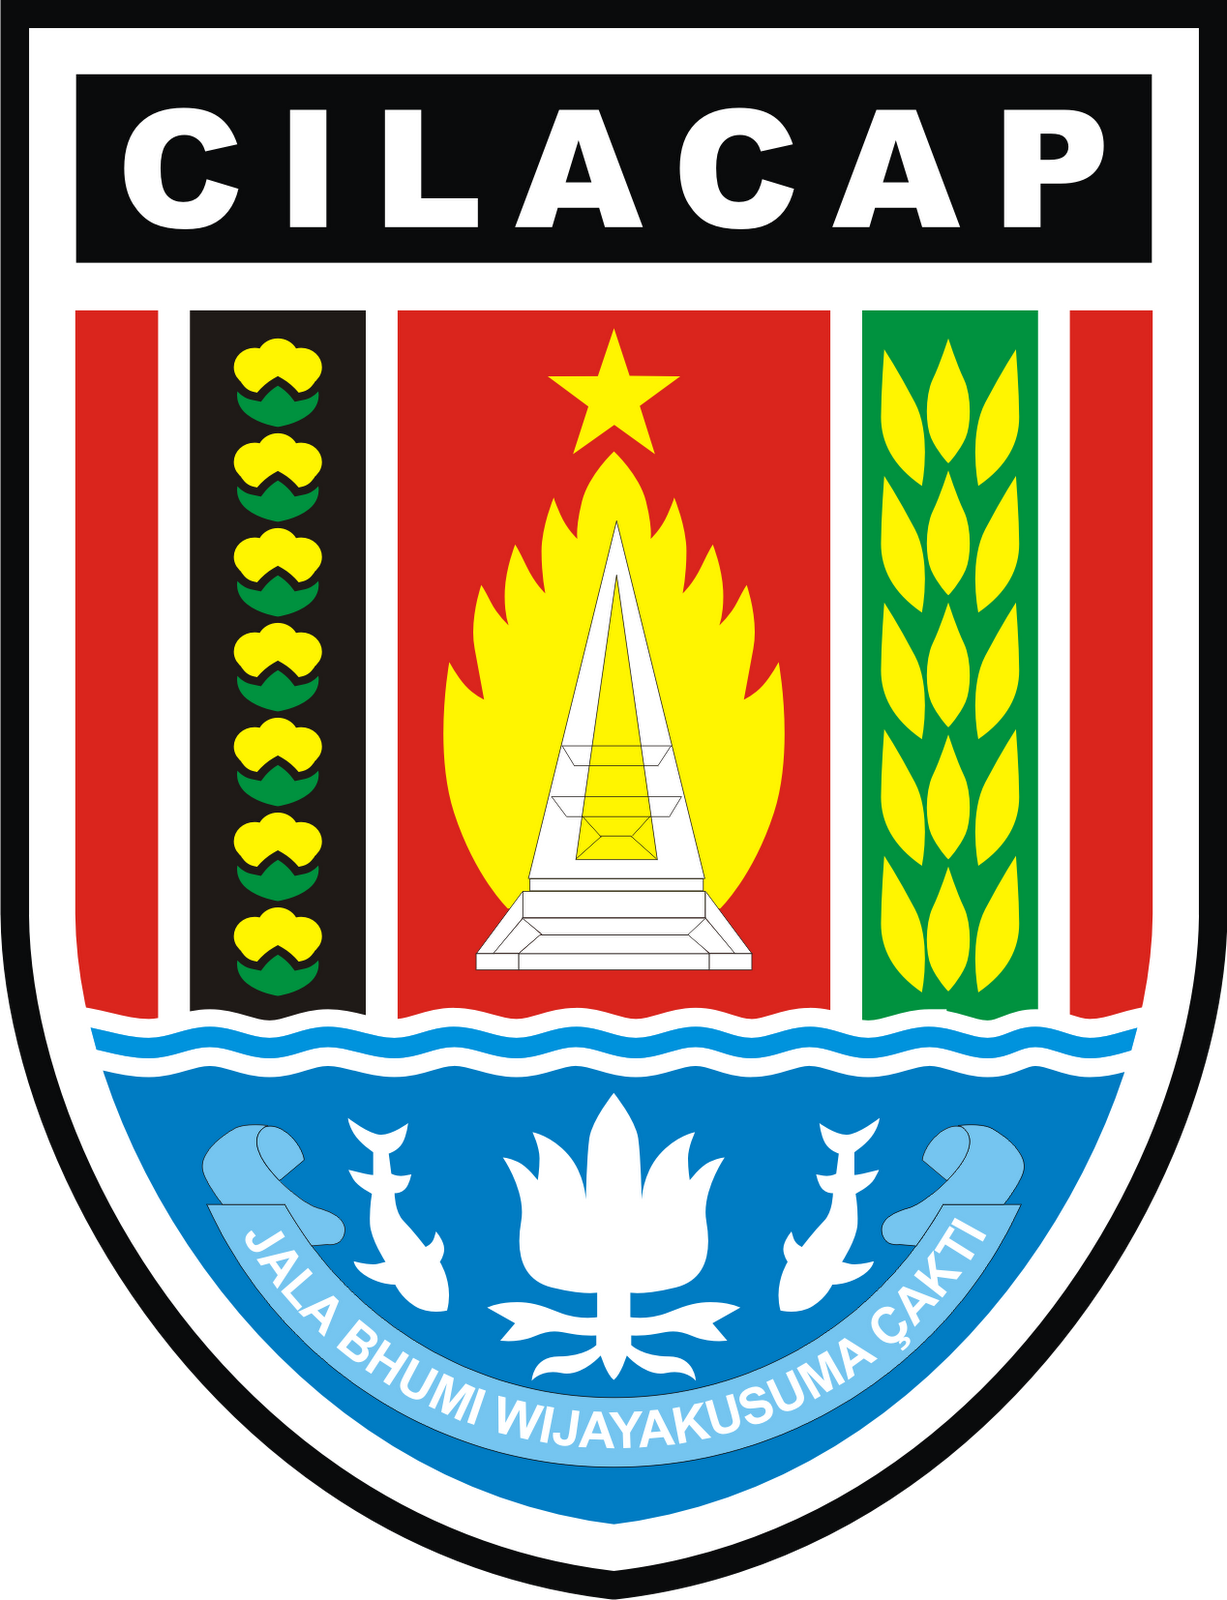  LOGO  CILACAP Gambar Logo 